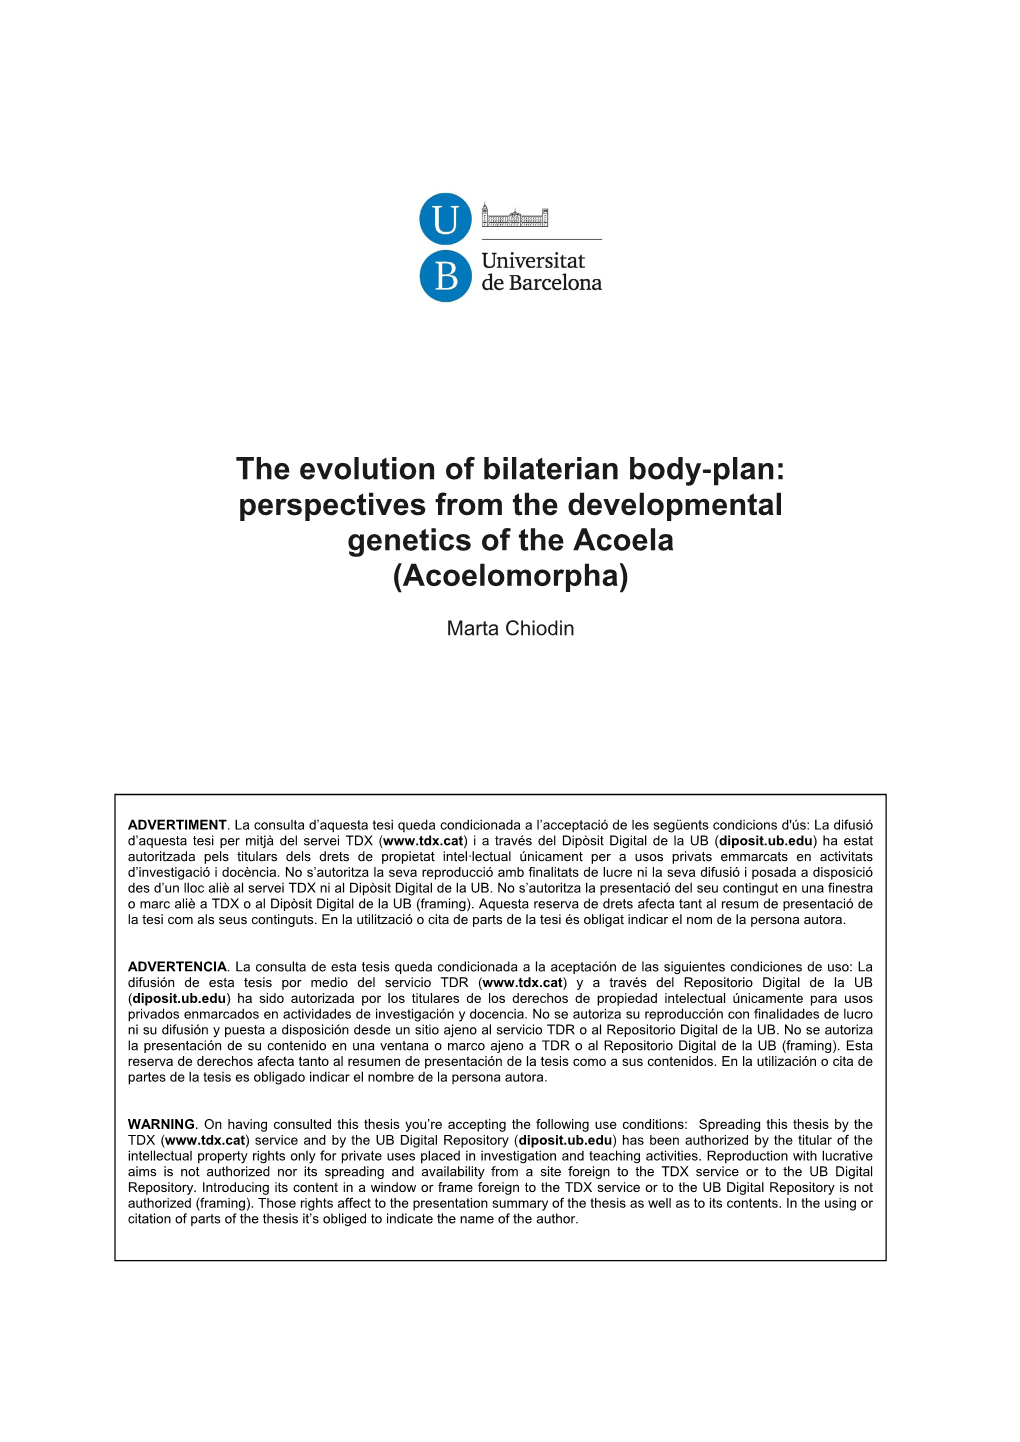 The Evolution of Bilaterian Body‐Plan: Perspectives from the Developmental Genetics of the Acoela (Acoelomorpha)